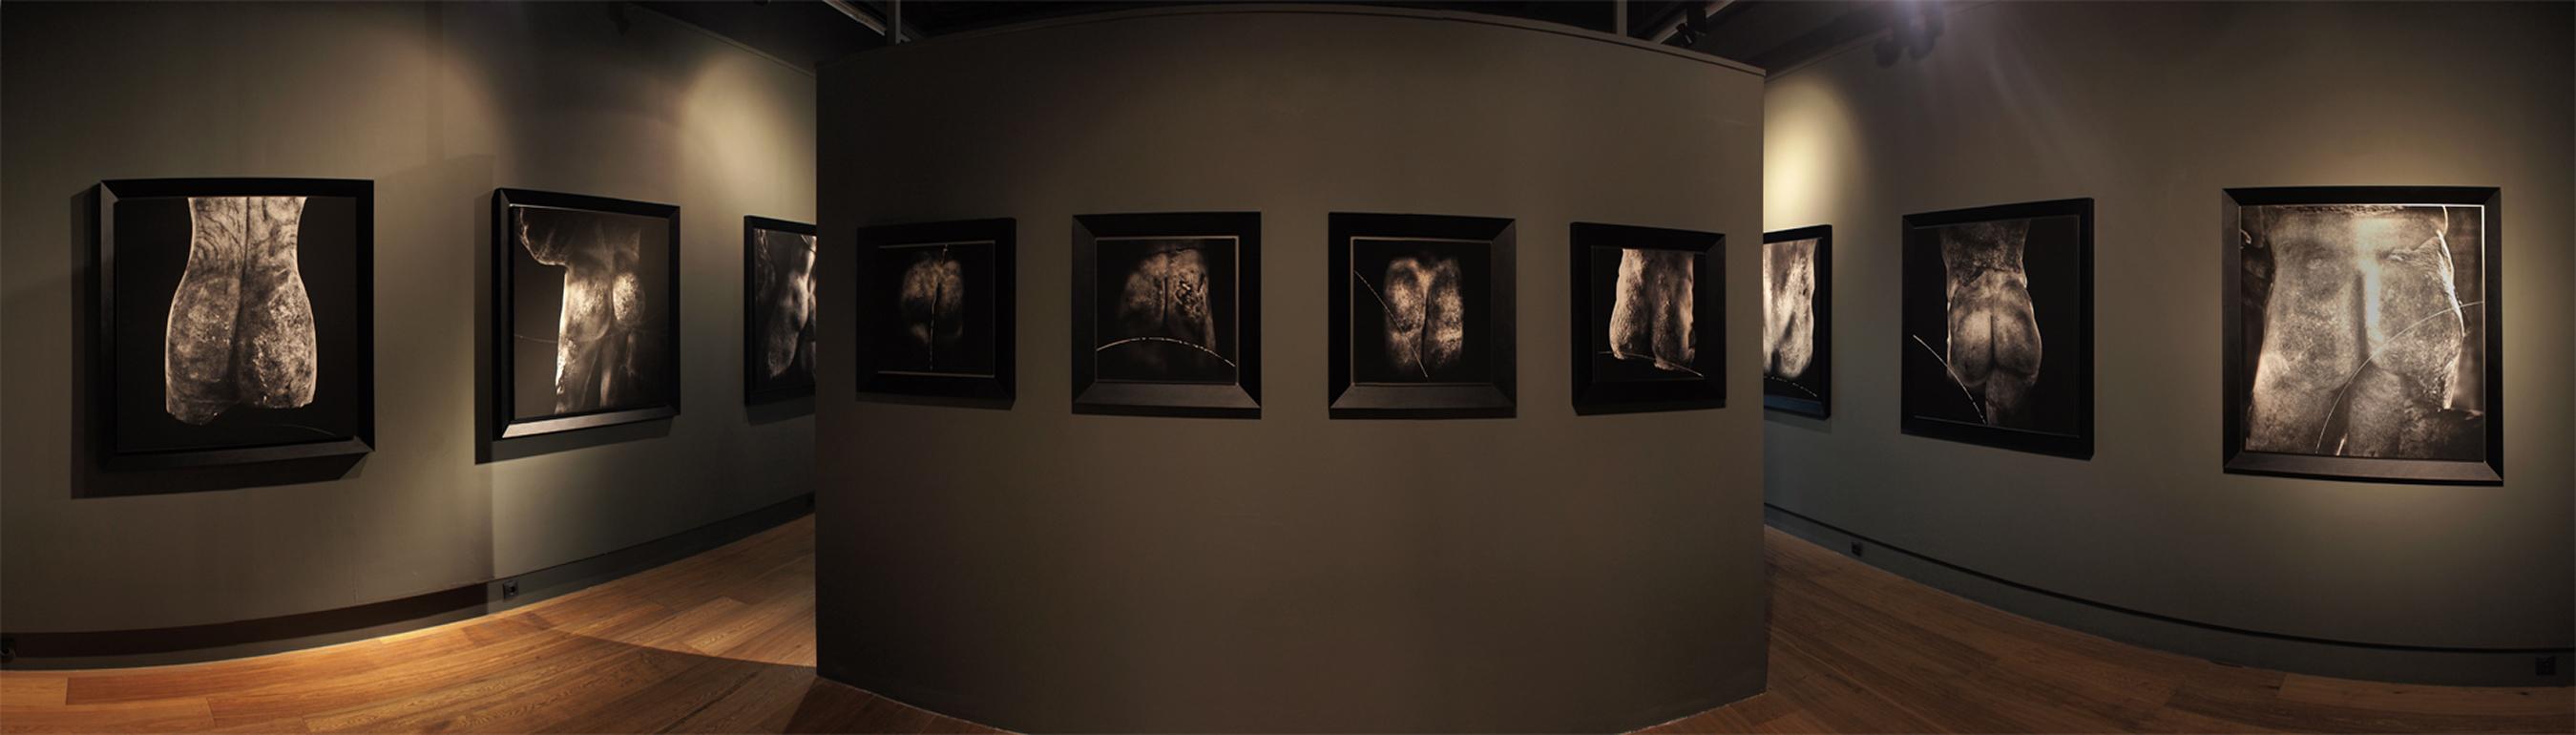 Stone Faces Series - Black Nude Photograph by Kamil Fırat